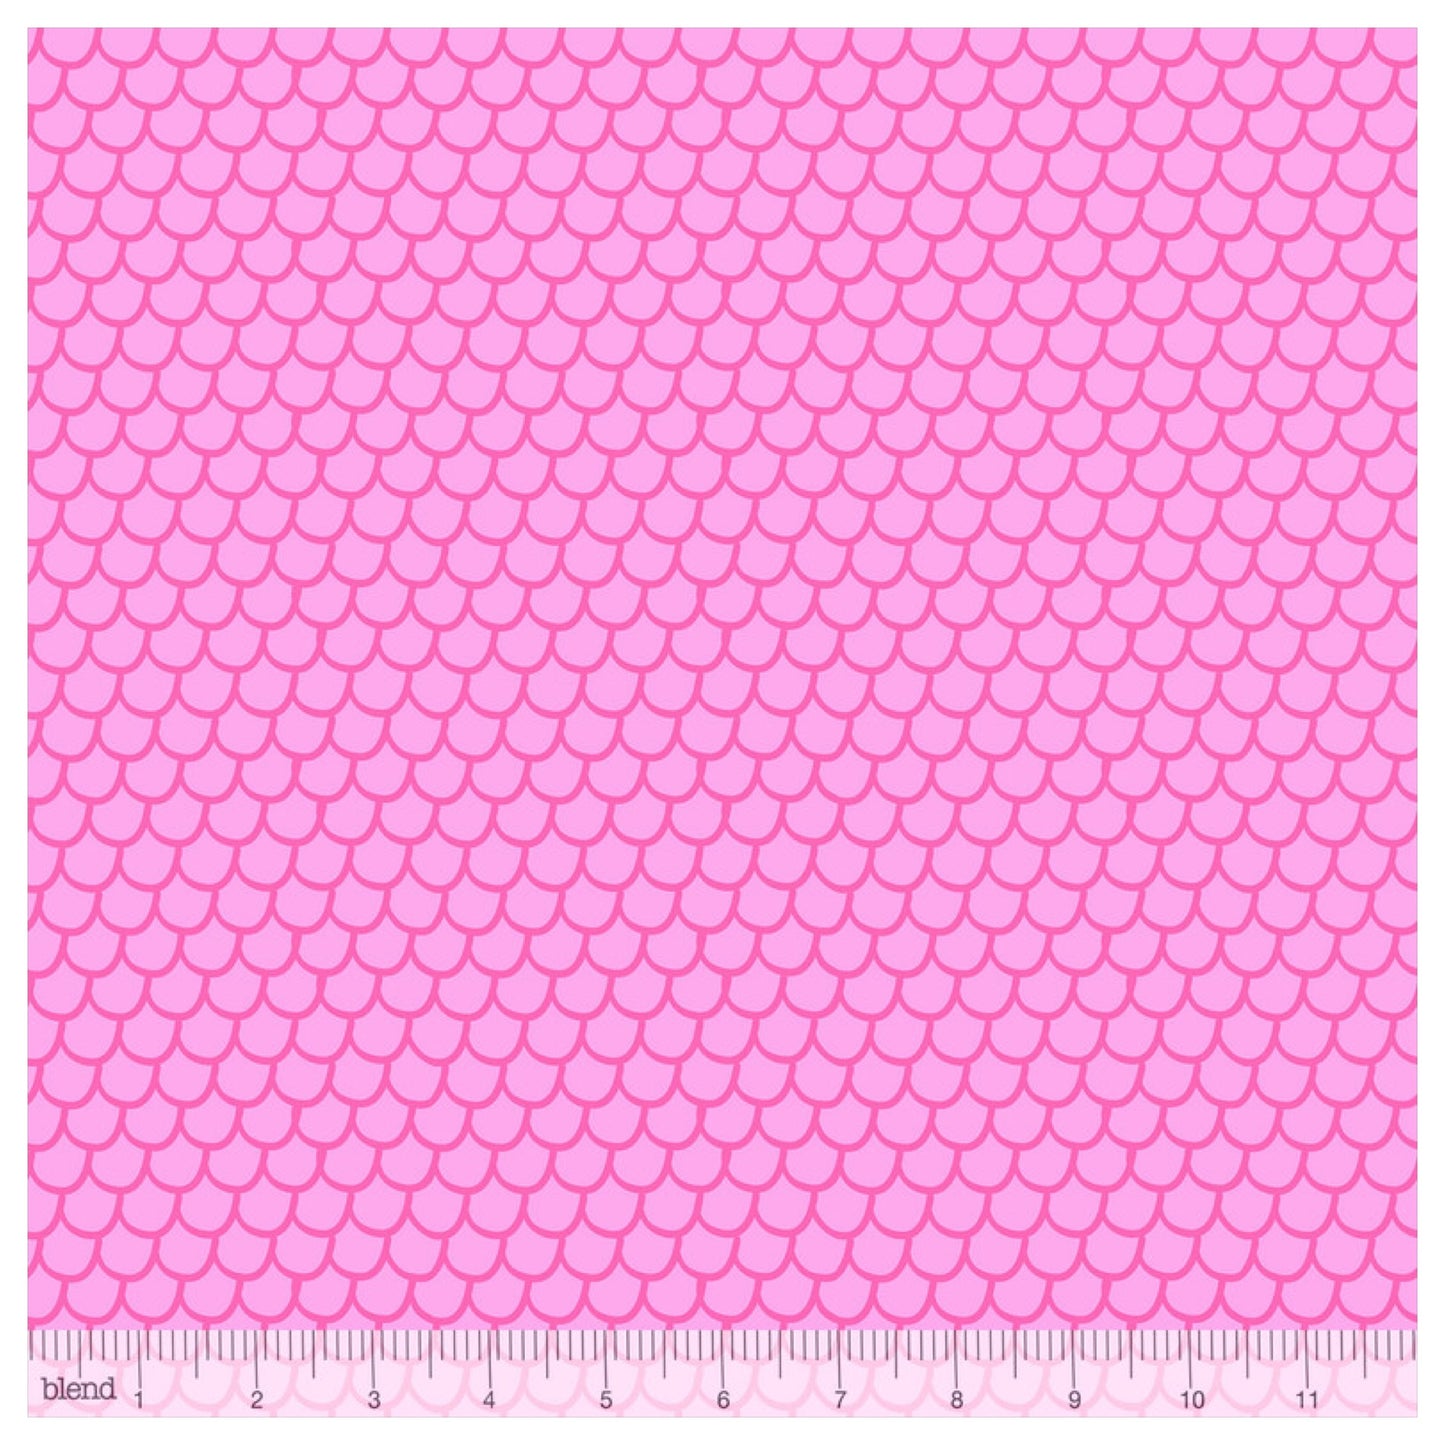 Mermaid Pink - Go Fish By Blend Fabrics. - 100% Cotton Fabric - Rosie's Craft Shop Ltd